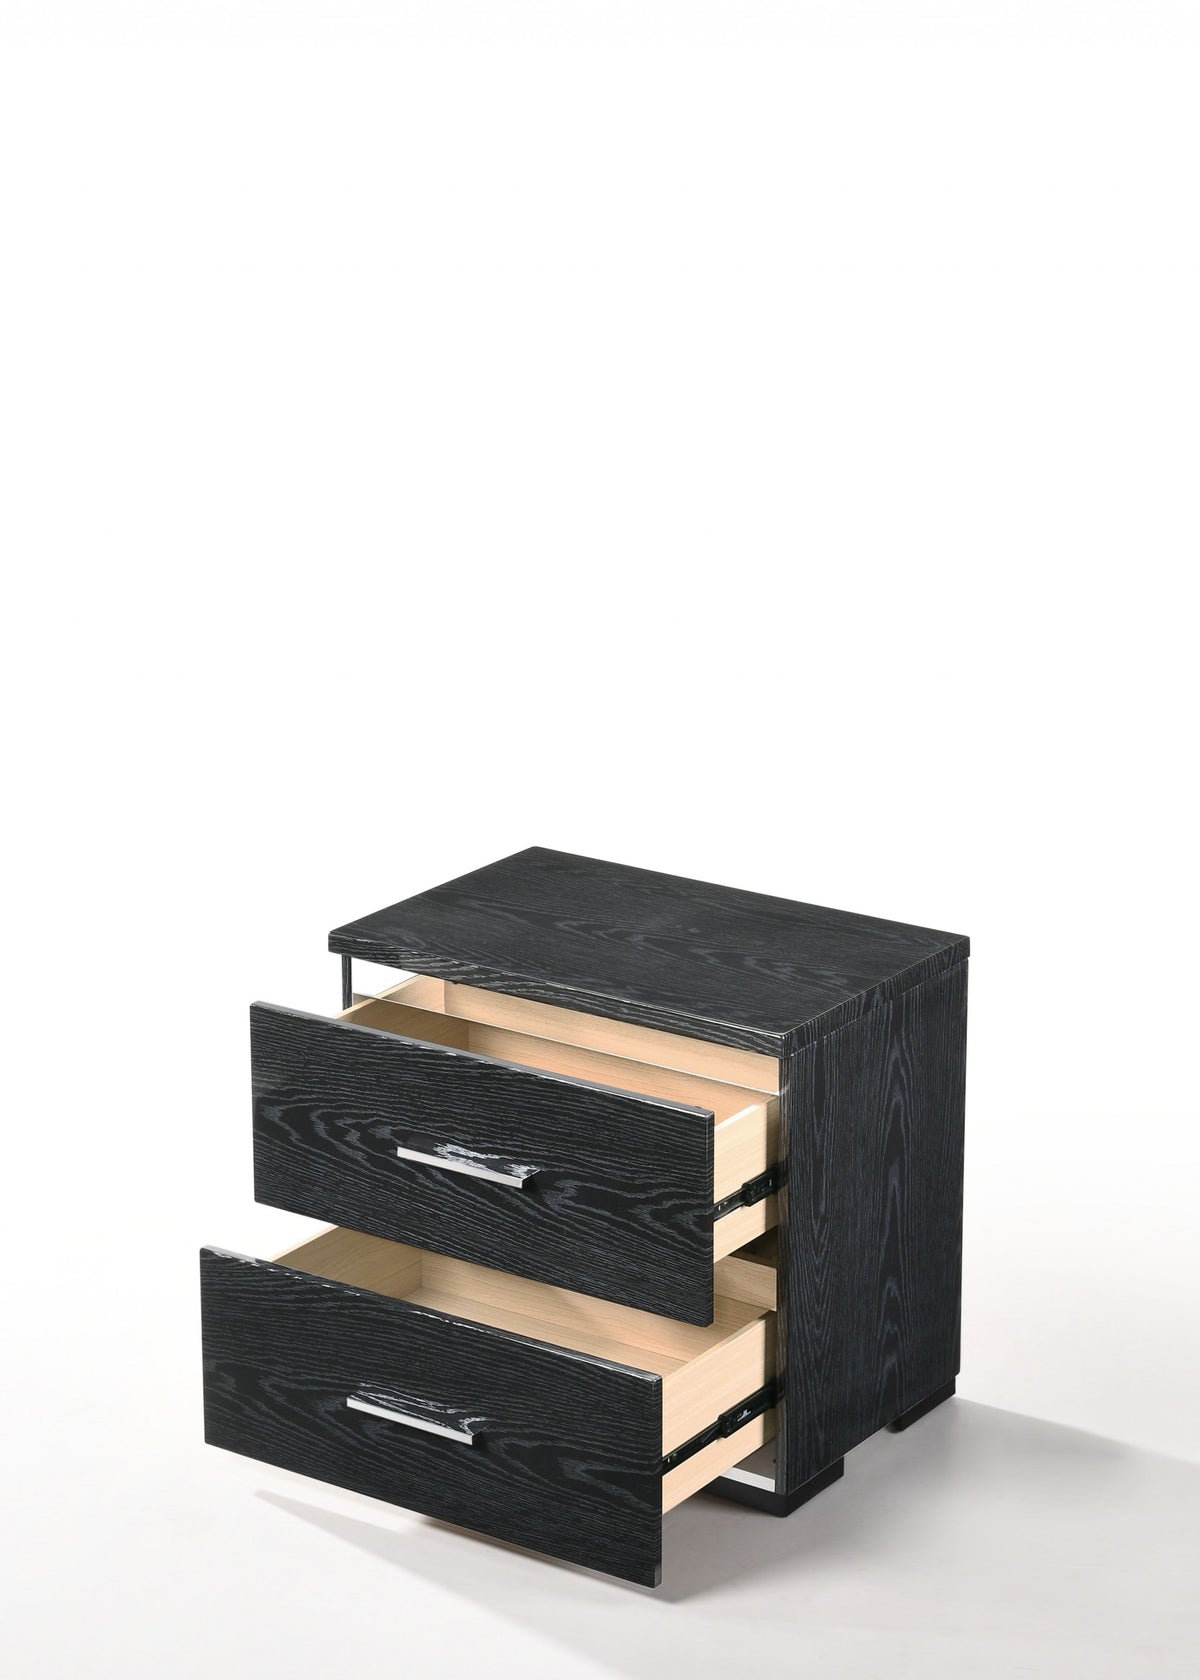 15' X 22' X 23' Black (High Gloss) Wood Veneer (Paper) Nightstand